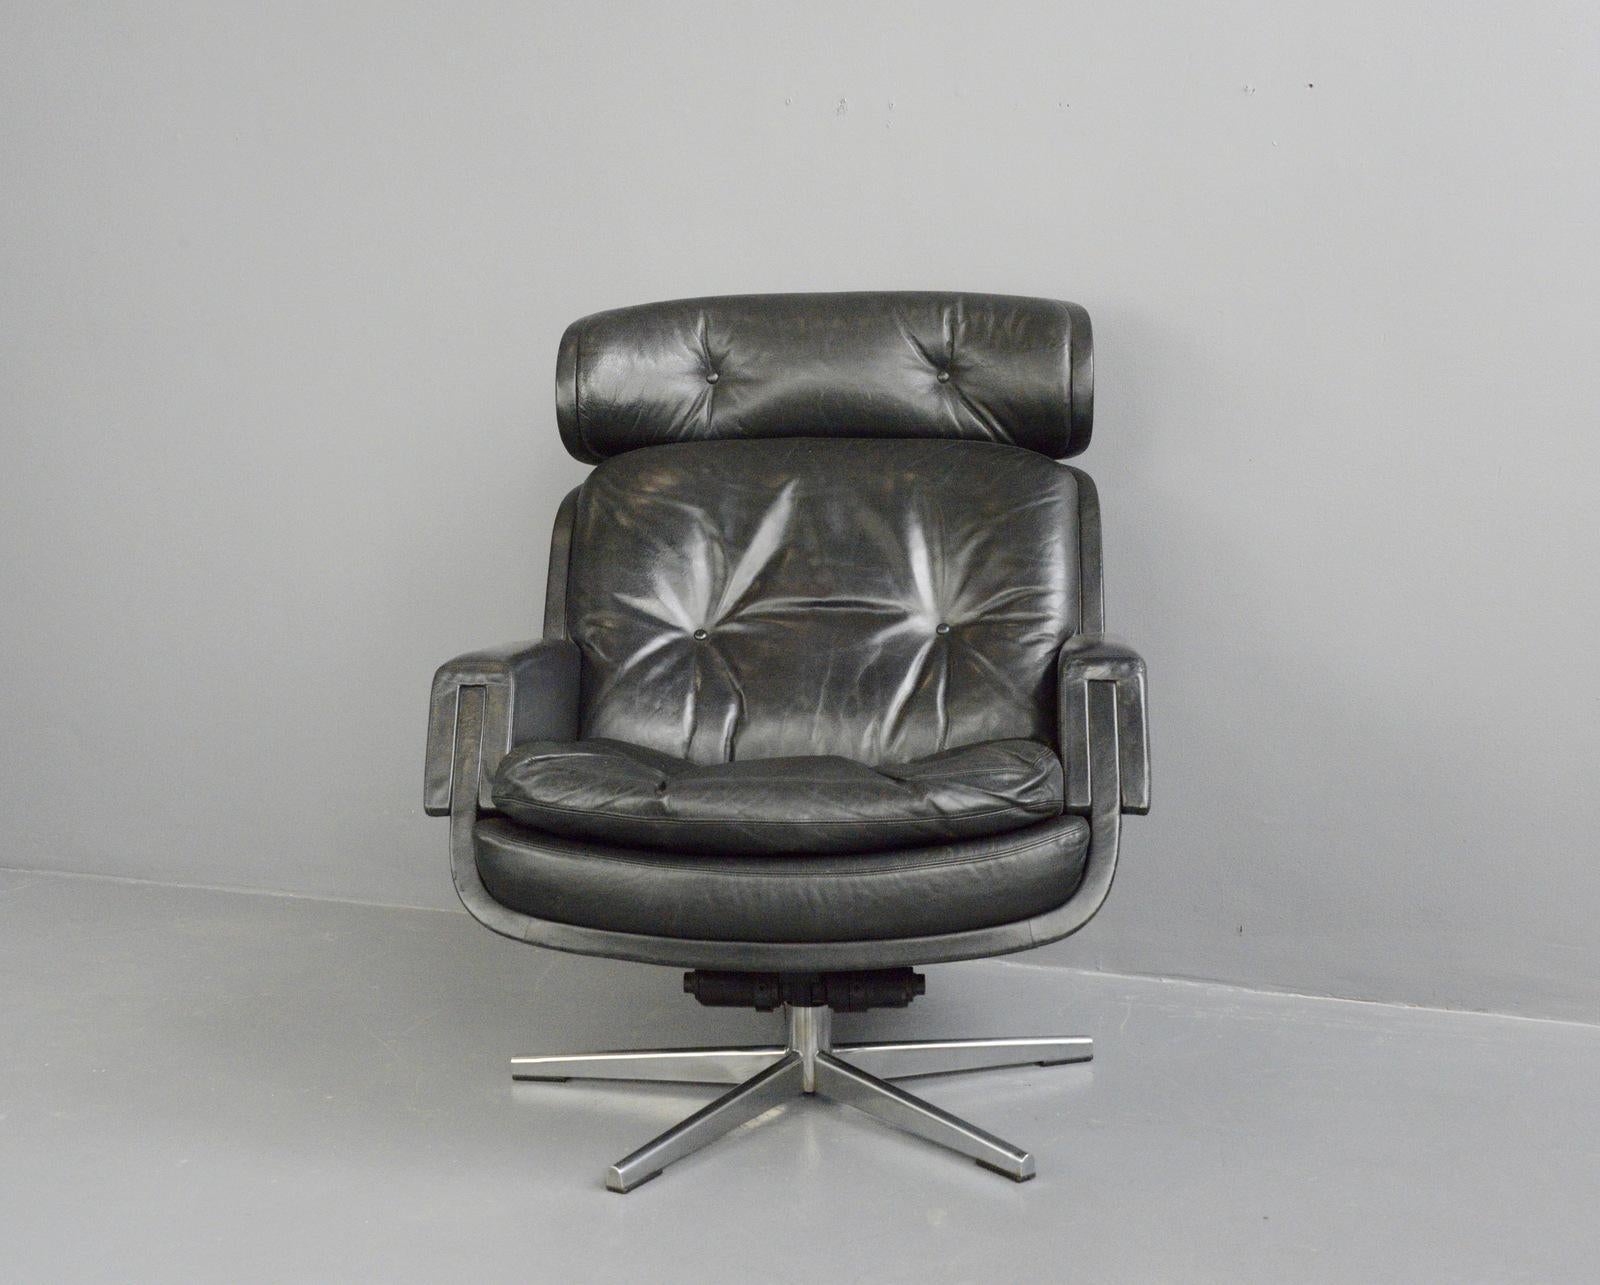 Midcentury lounge chair by Kurt Hvitsjö for Isku, circa 1960s

- Button back black leather
- Reclining and swivel
- Designed by Kurt Hvitsjö
- Produced by Isku, Lahti
- Finnish, 1960s
- Measures: 77cm wide x 75cm deep x 95cm tall x 46cm seat